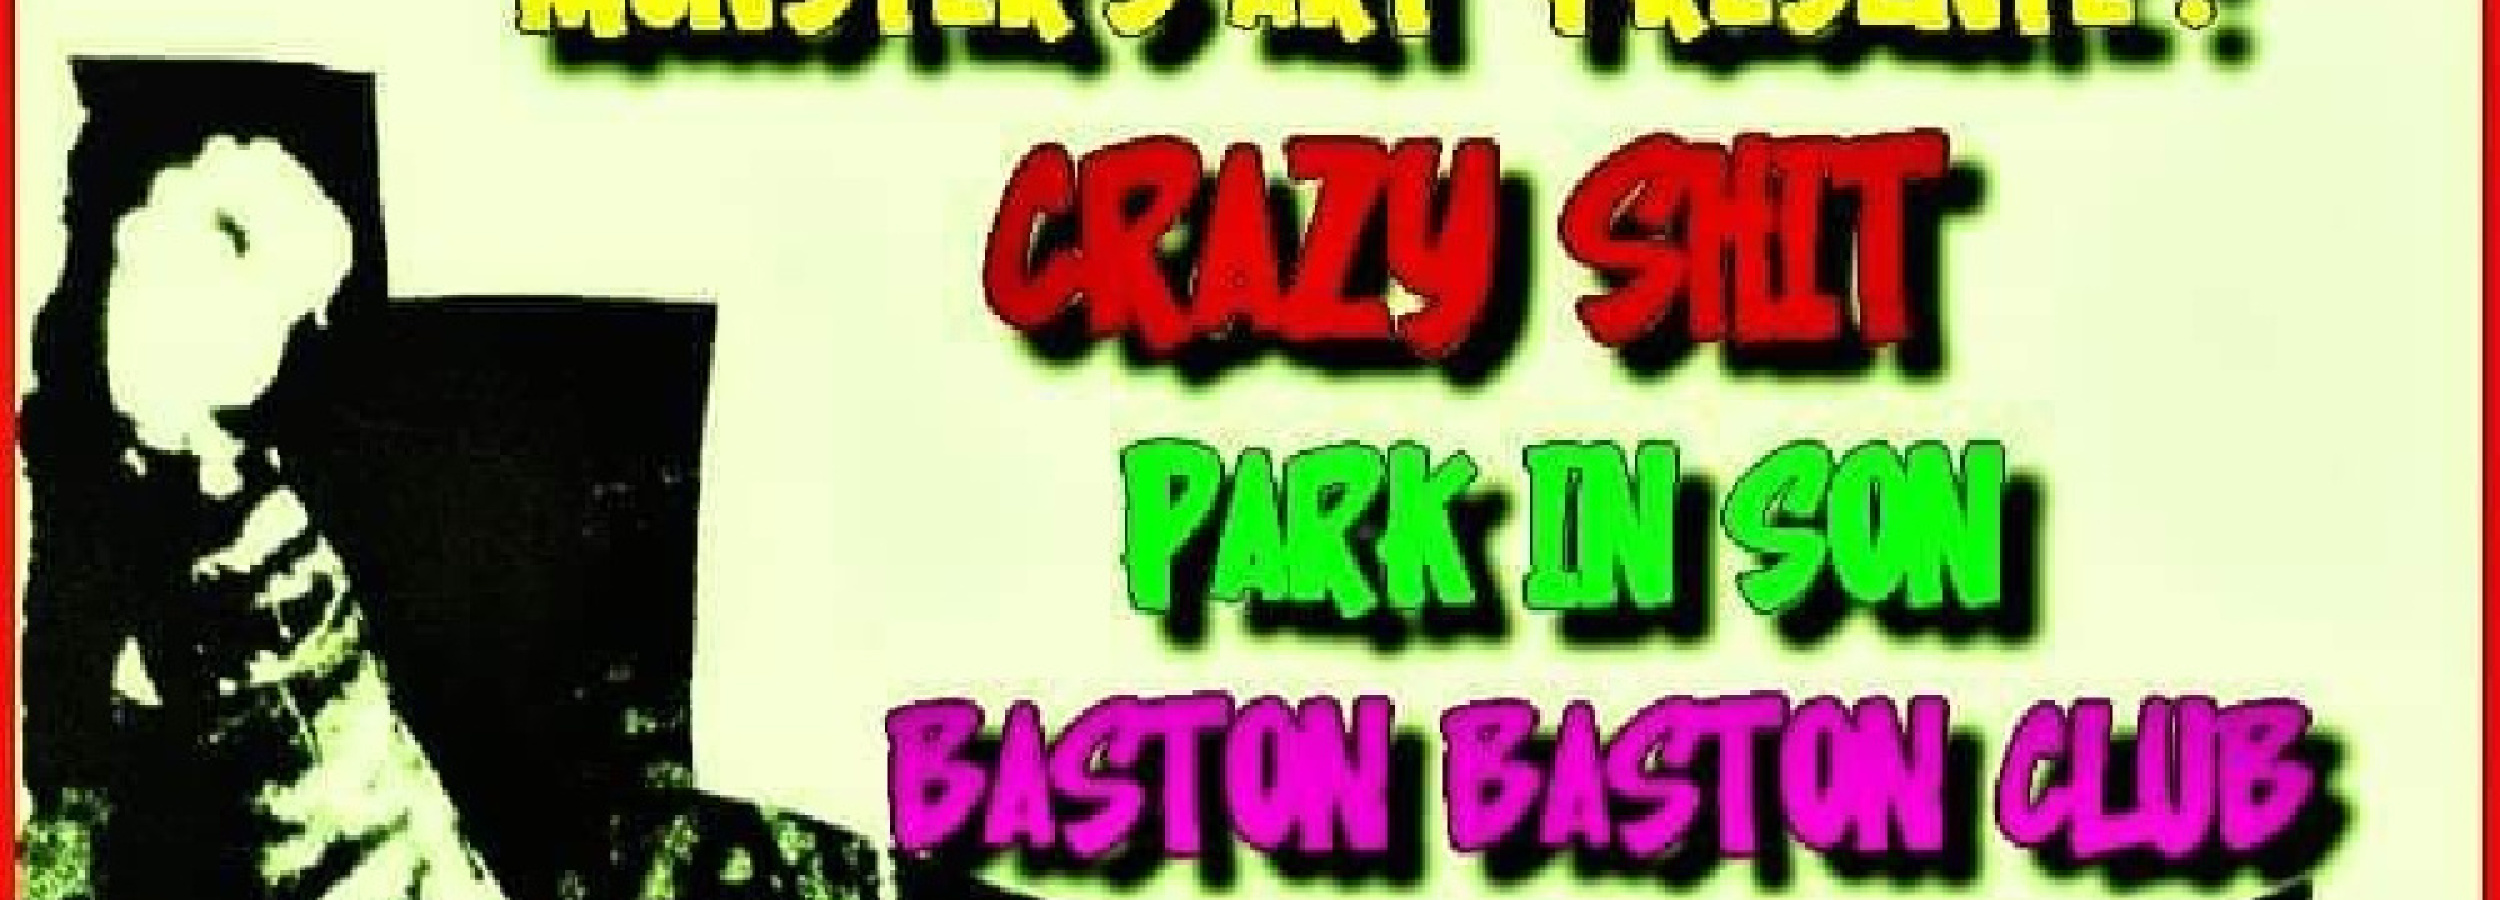 Crazy Shit, Park in Son & Baston Baston Club at the Monster'S Art